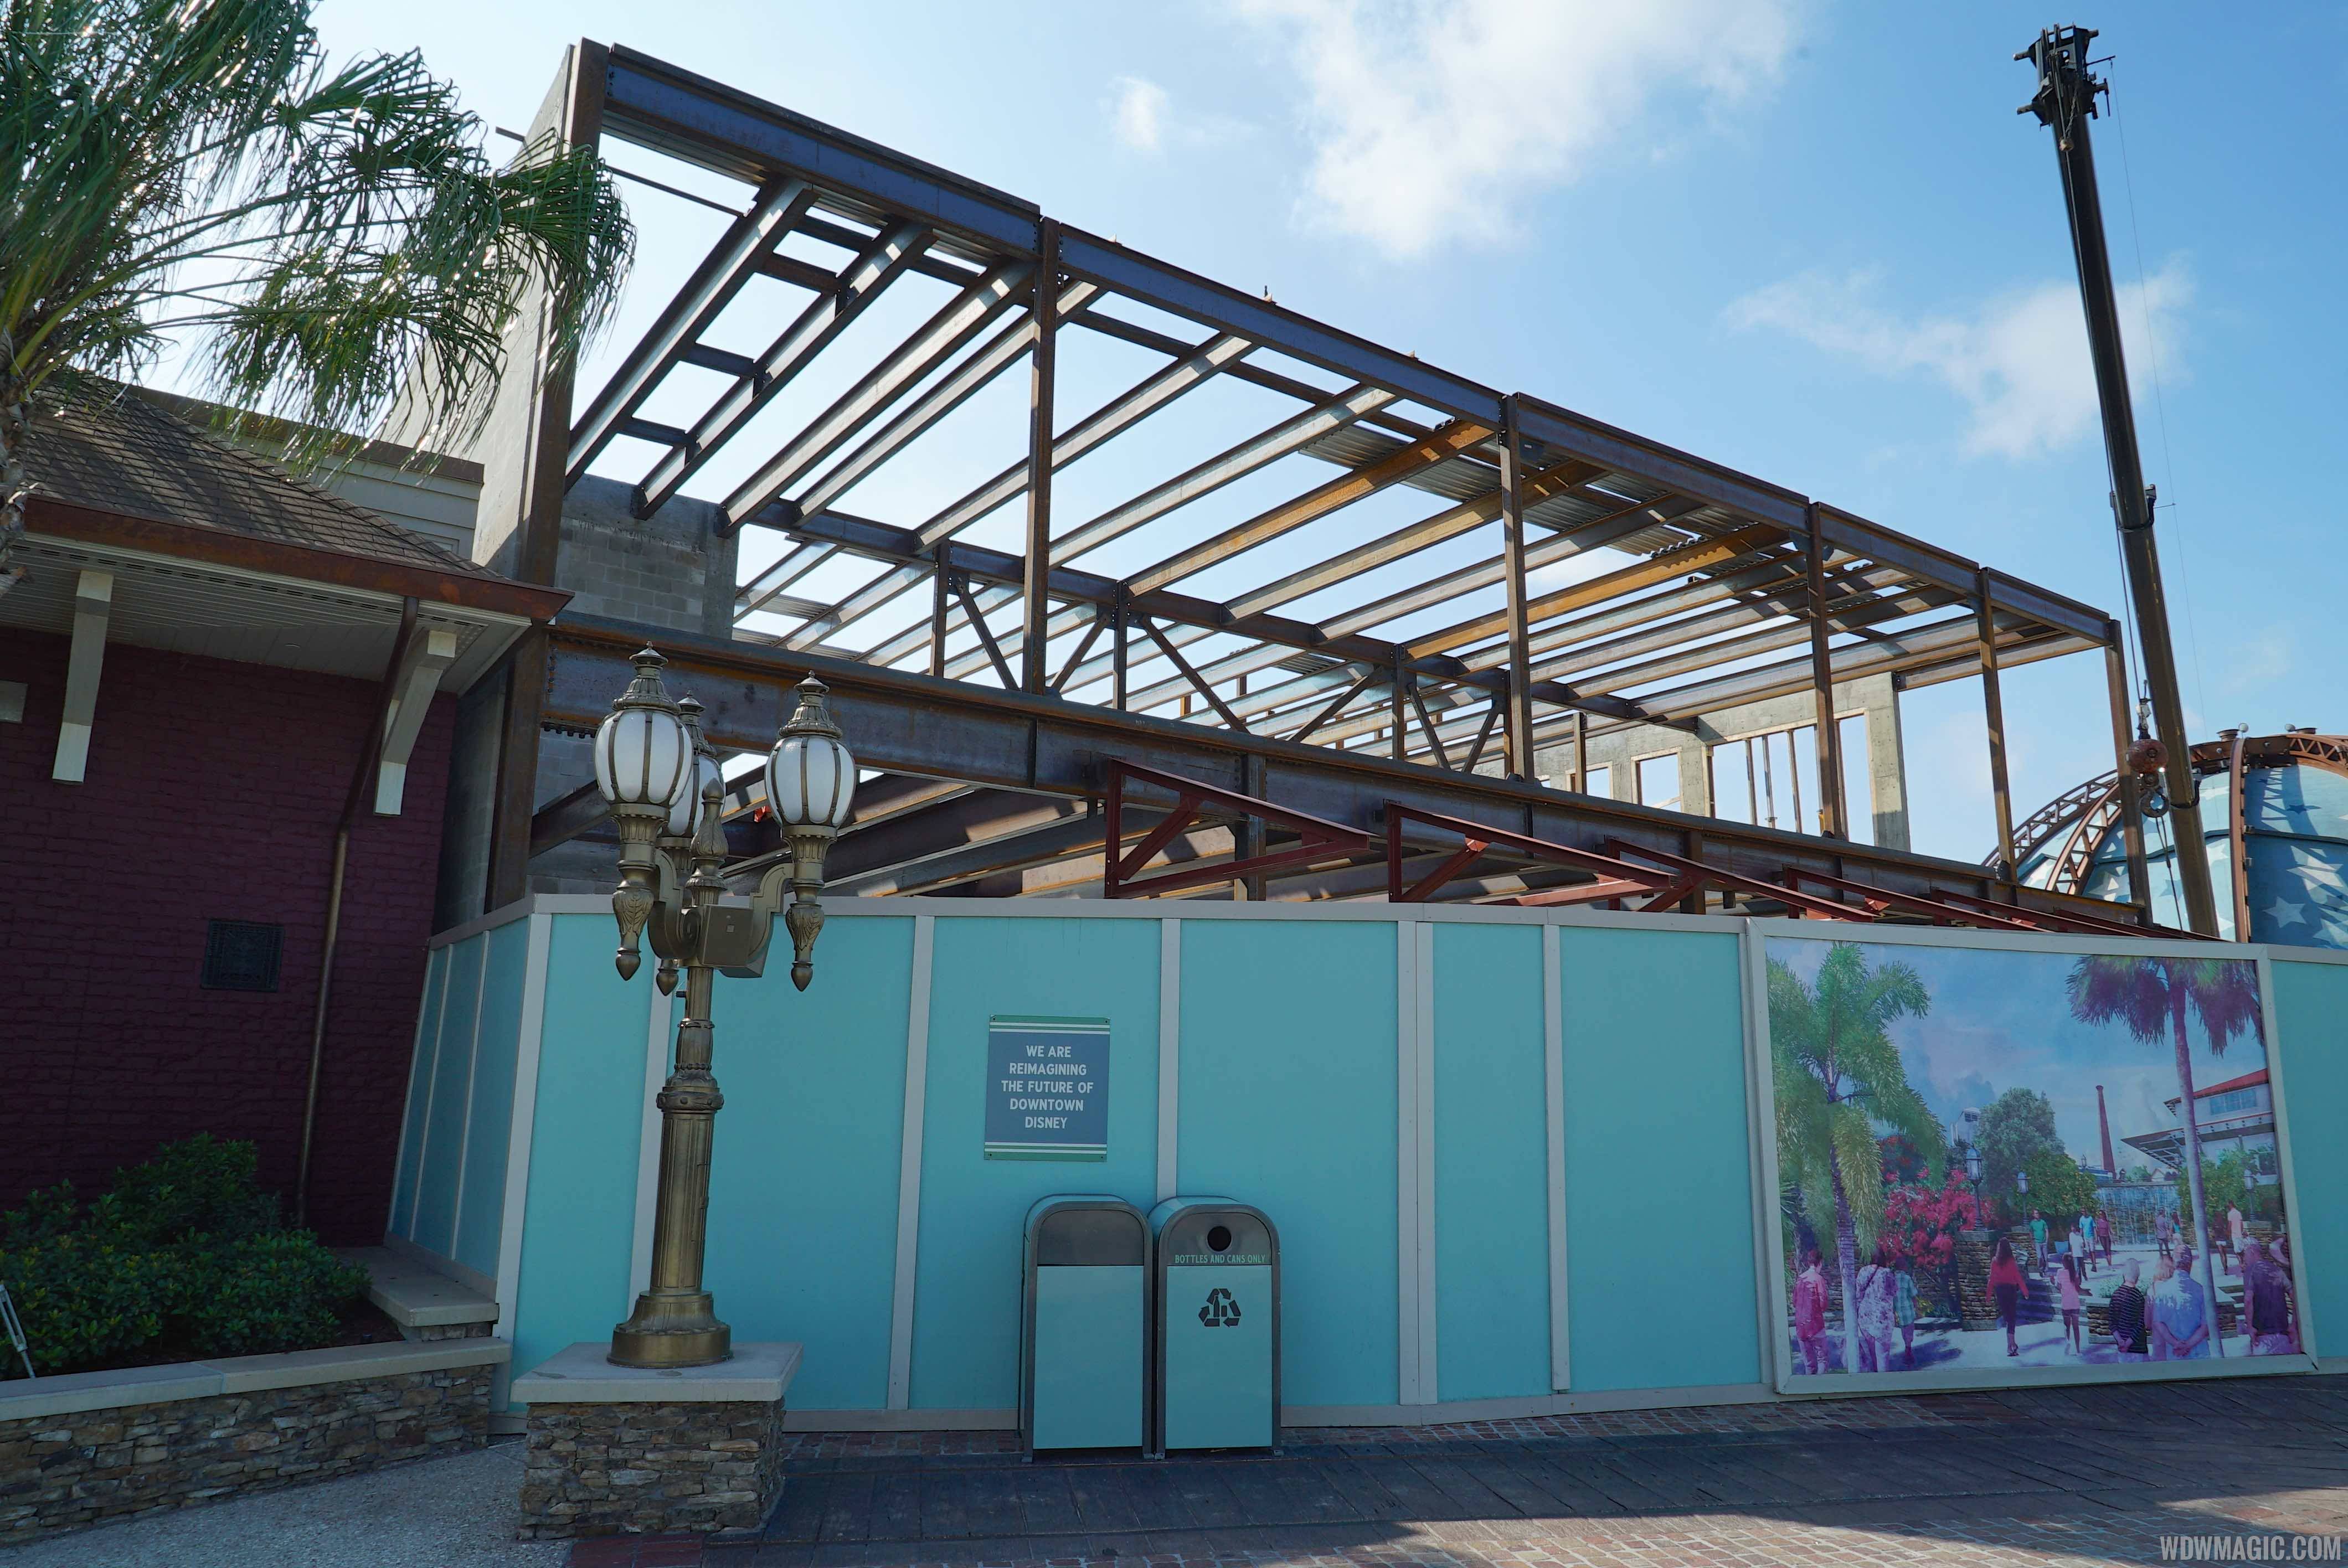 PHOTOS - STK Orlando construction update at Disney Springs